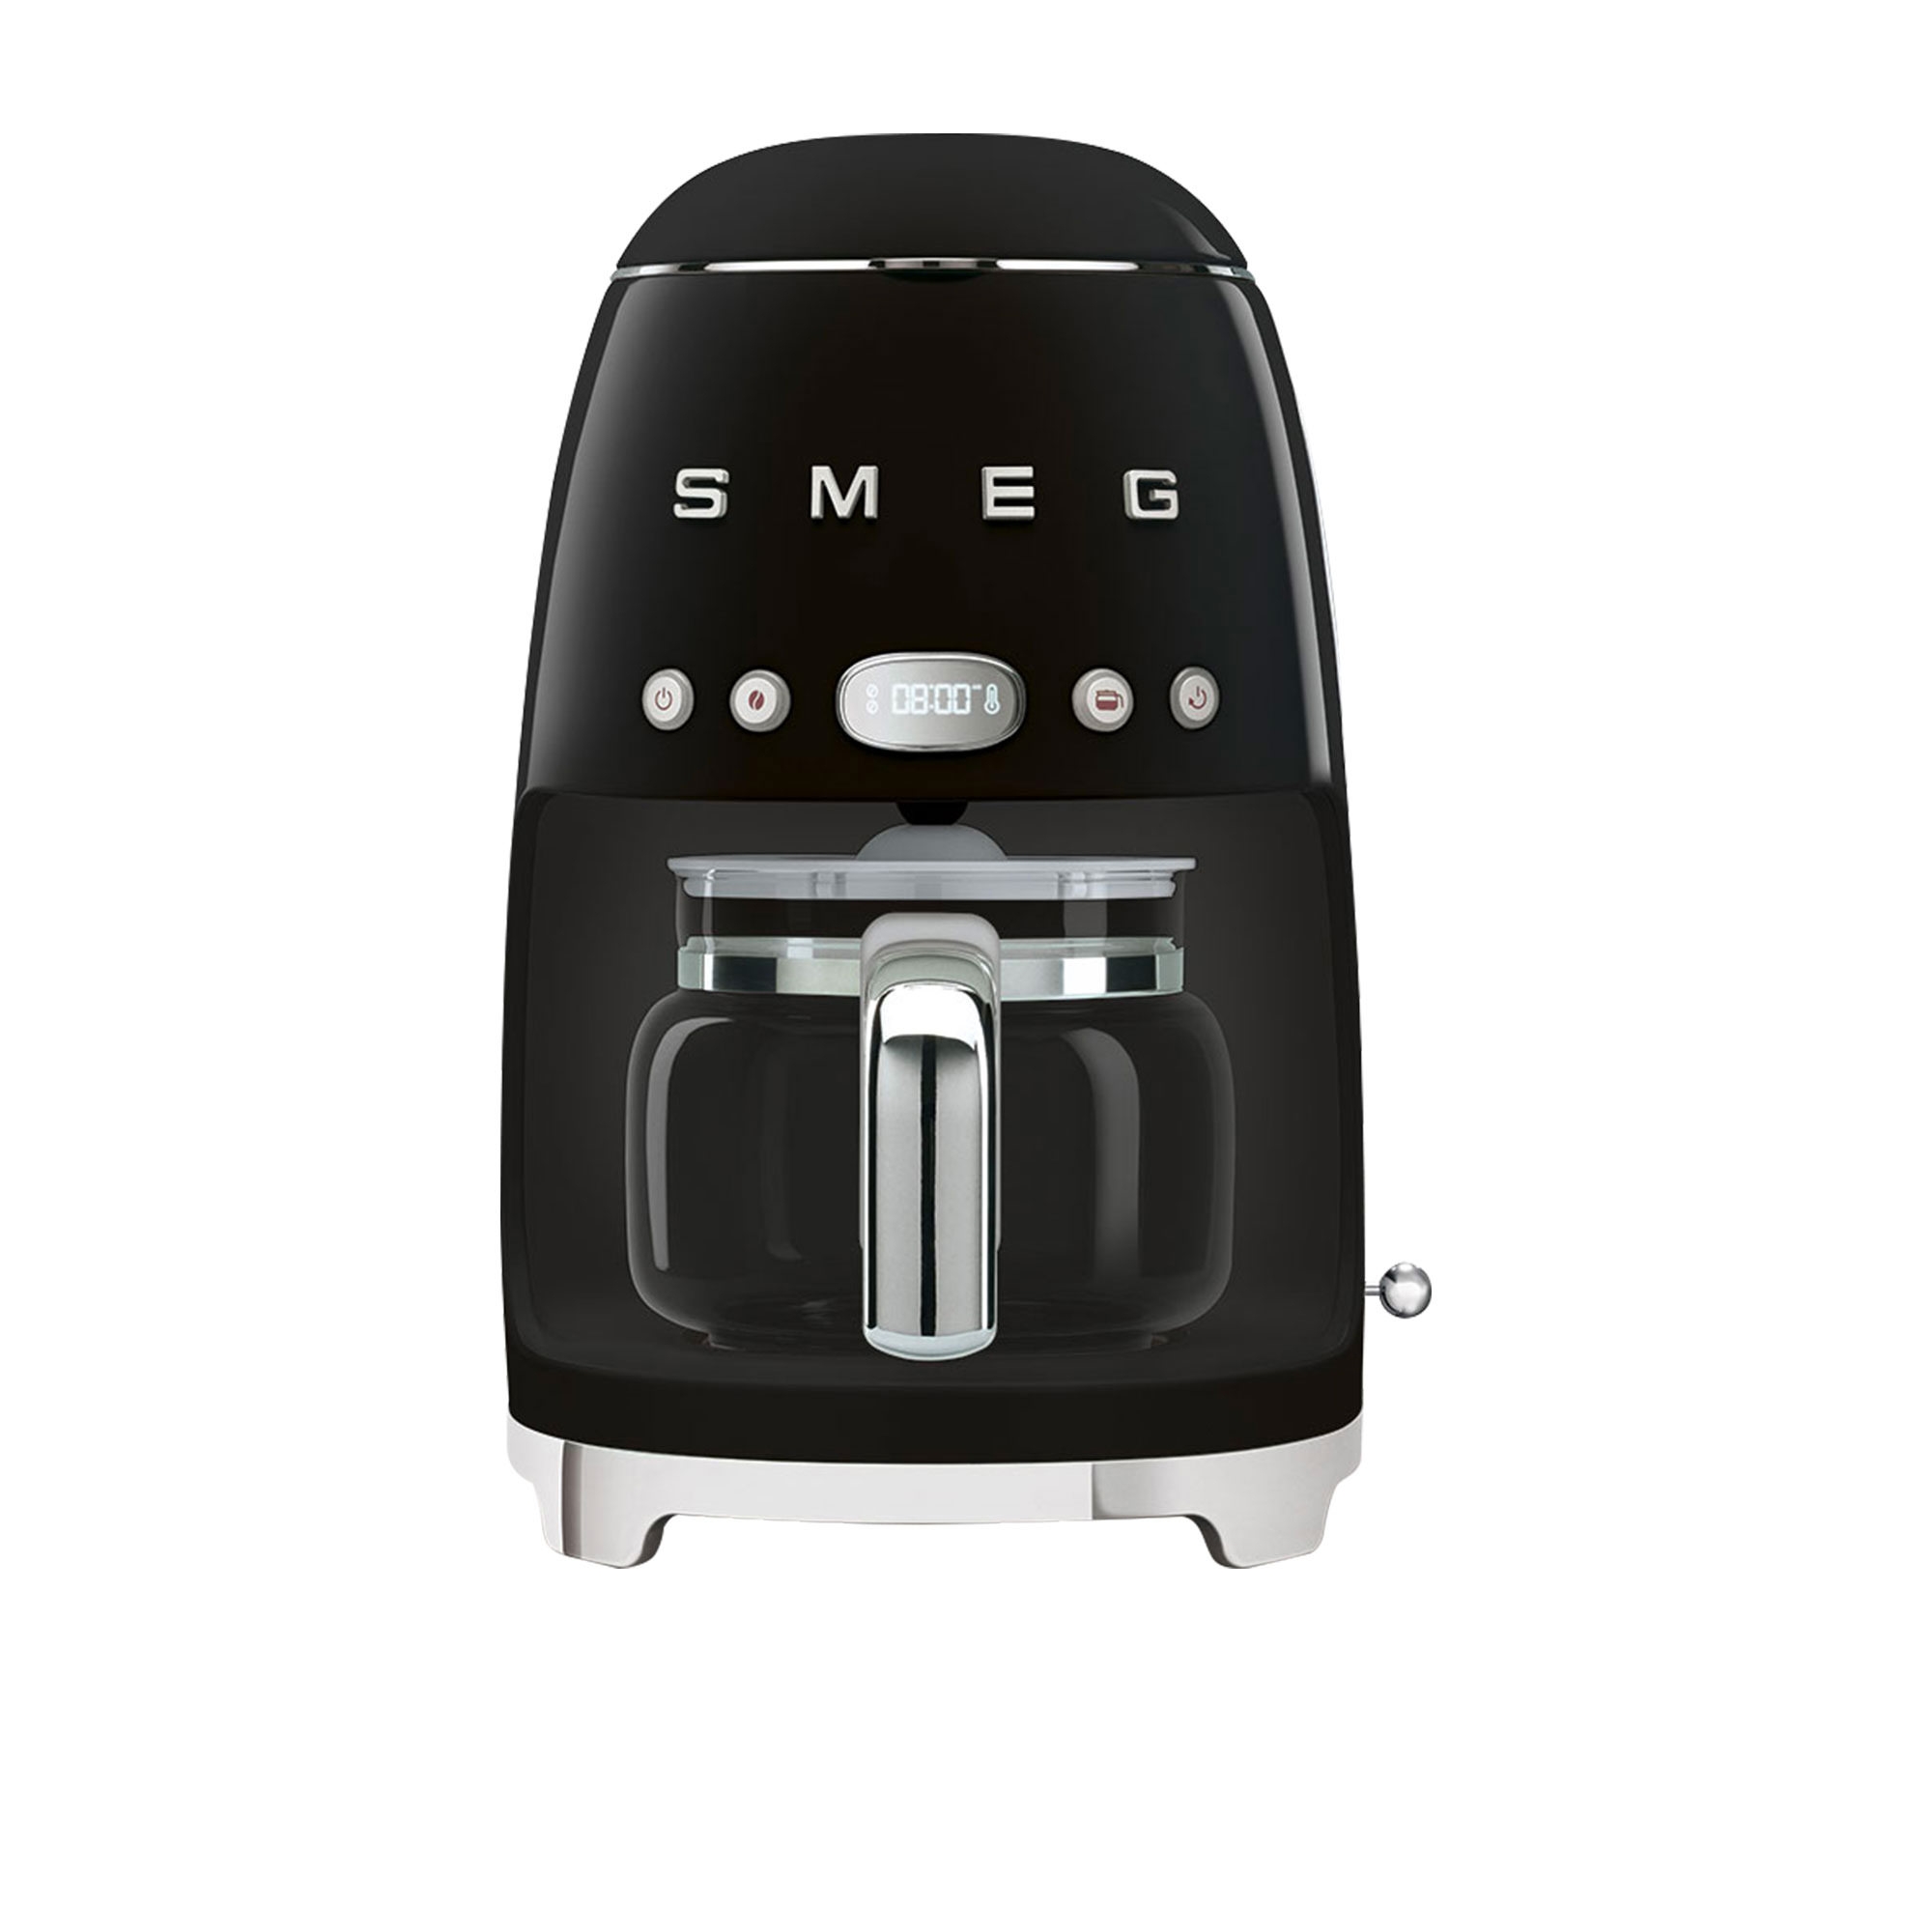 Smeg 50's Retro Style Drip Filter Coffee Machine Black Image 1